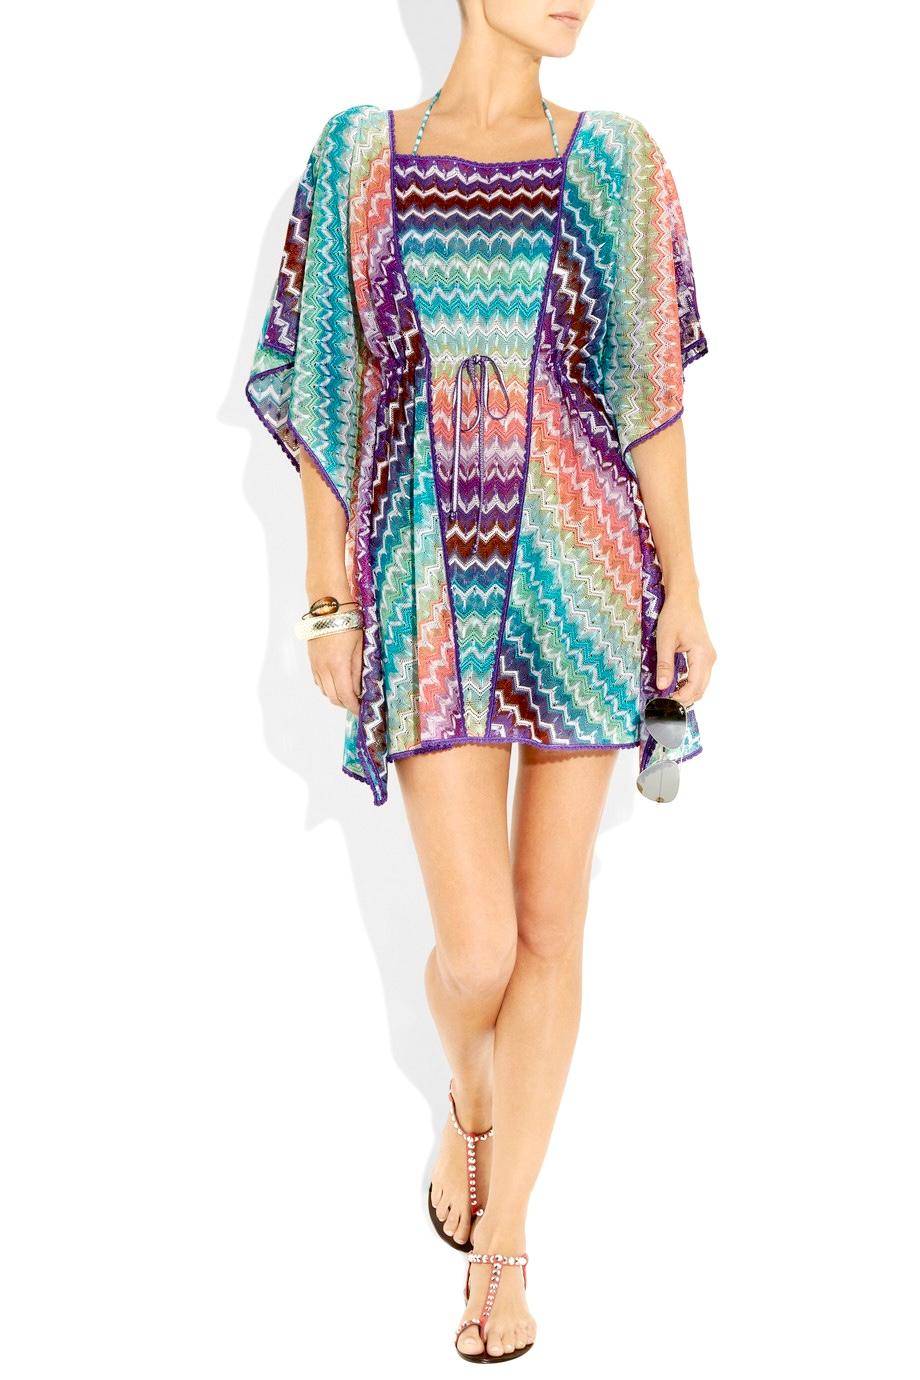 NEW Missoni Pastels Crochet Knit Kaftan Tunic Cover Up Dress 44 For Sale 2